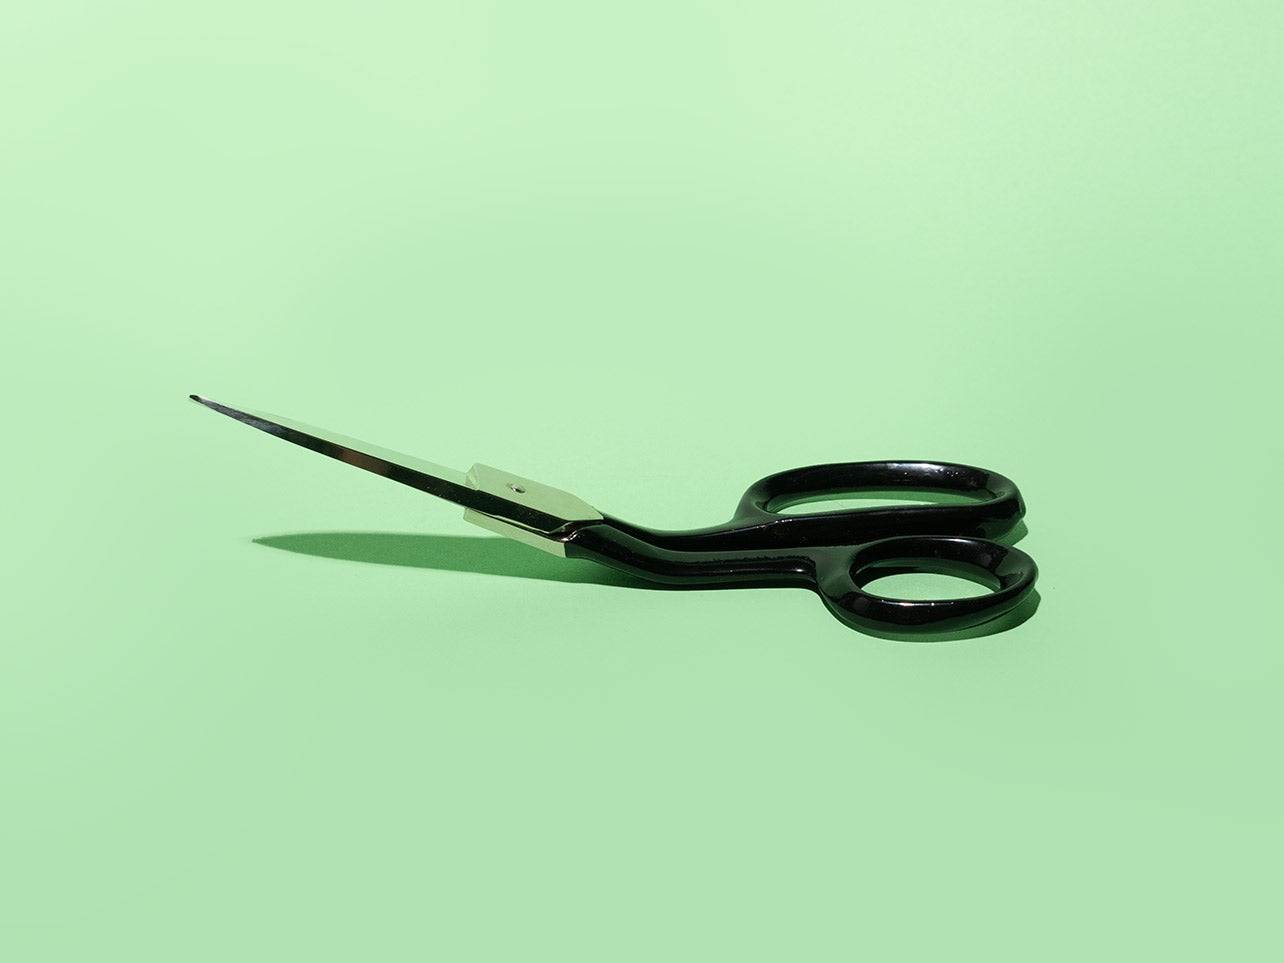 Bent-Handle Shaping Scissors